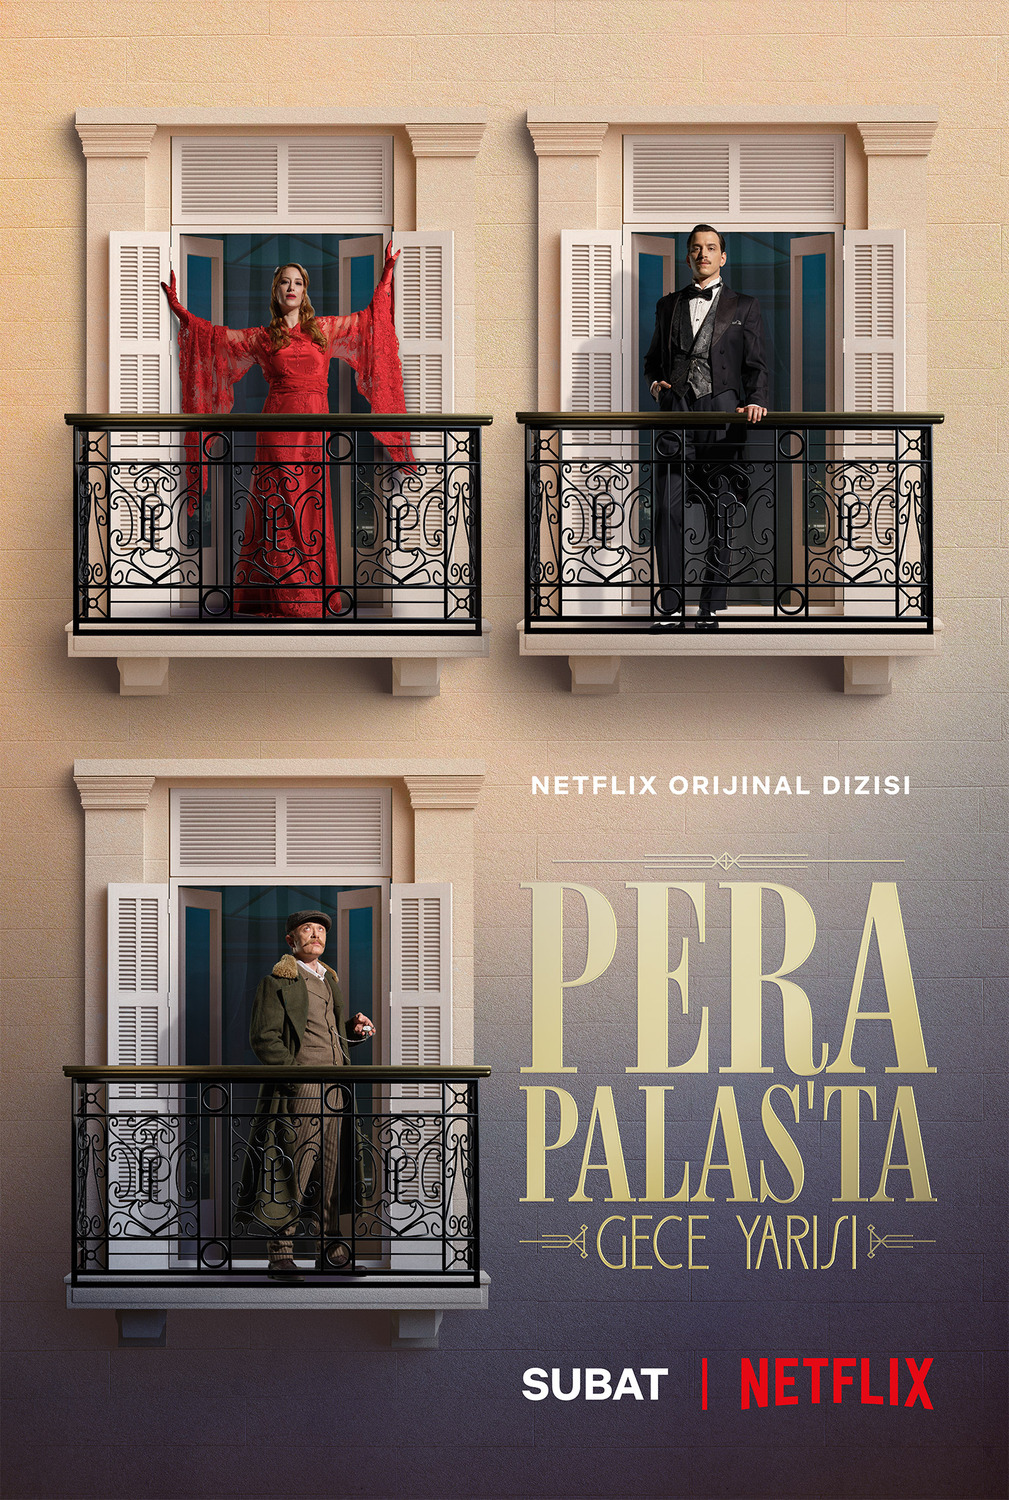 Extra Large TV Poster Image for Pera Palas'ta Gece Yarisi (#2 of 10)